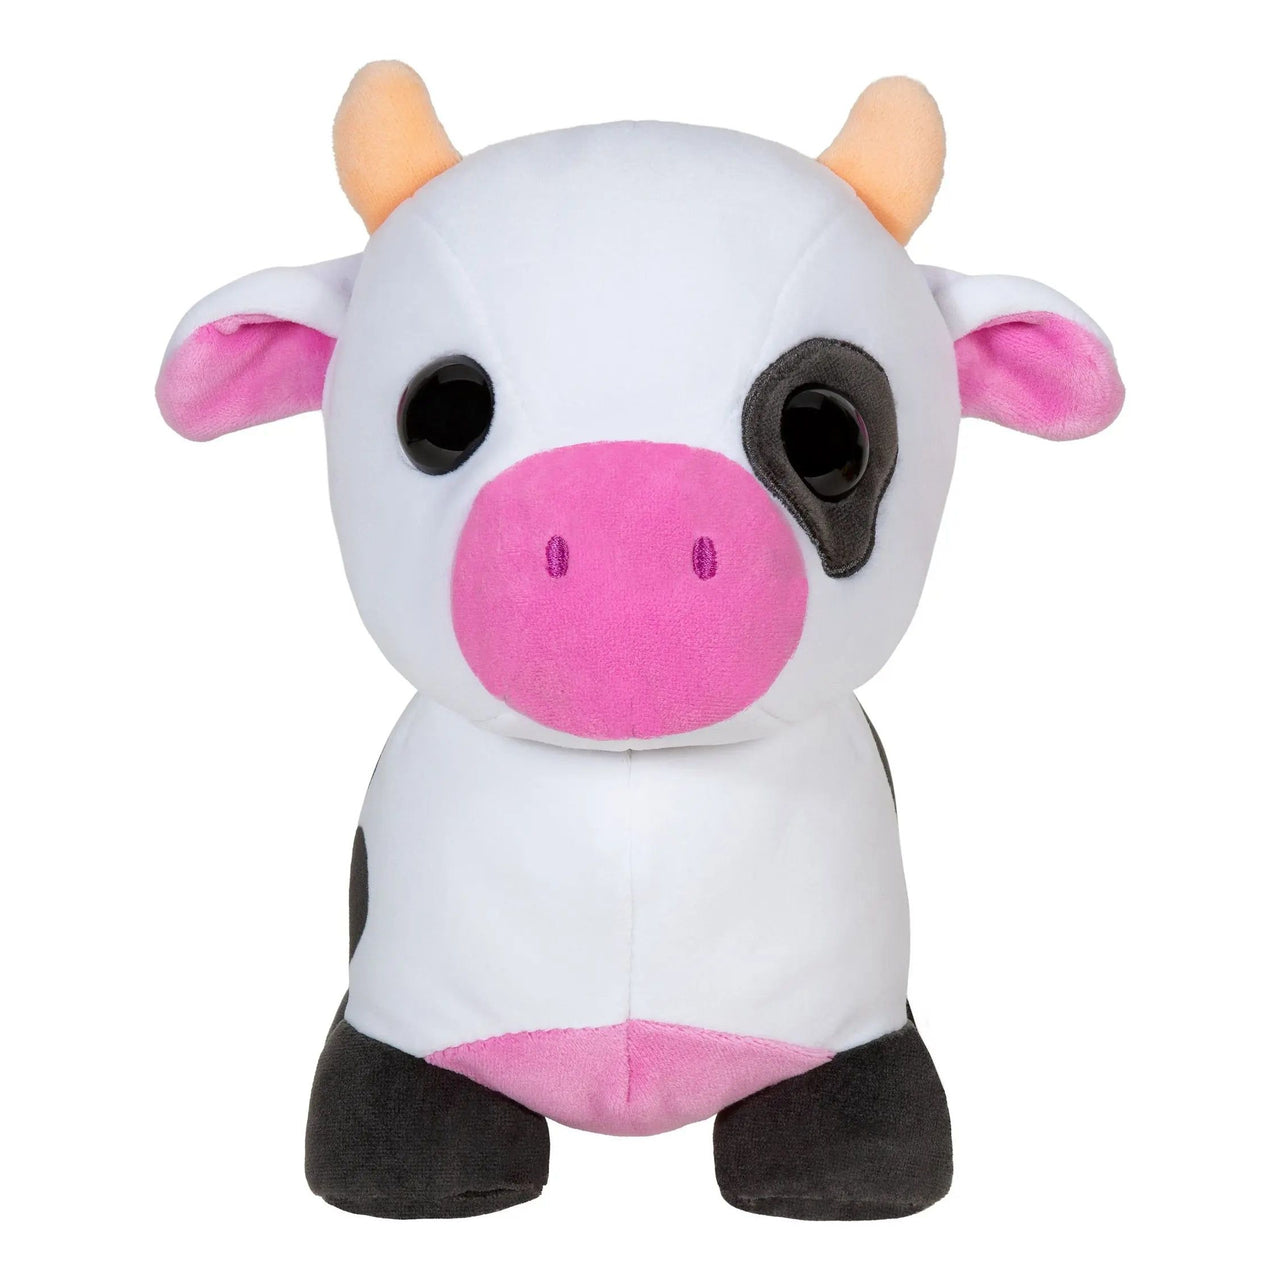 Adopt Me 8" Cow Collector Plush Adopt Me